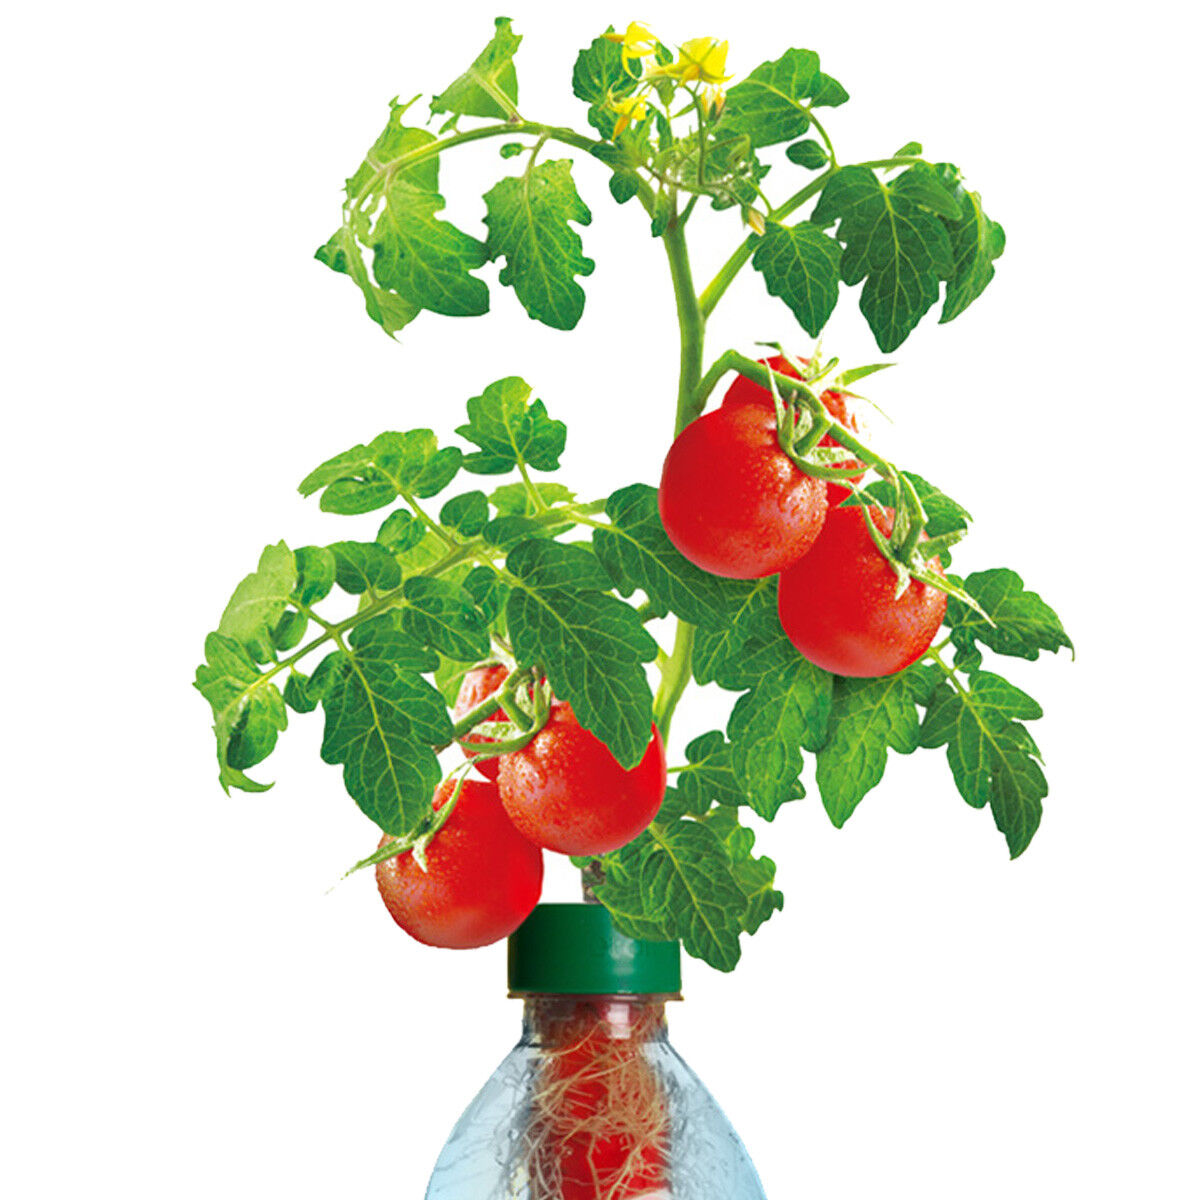 PETomato™ Hydroponic Tomato Plant Growing Kit ASI9810 by Kagan